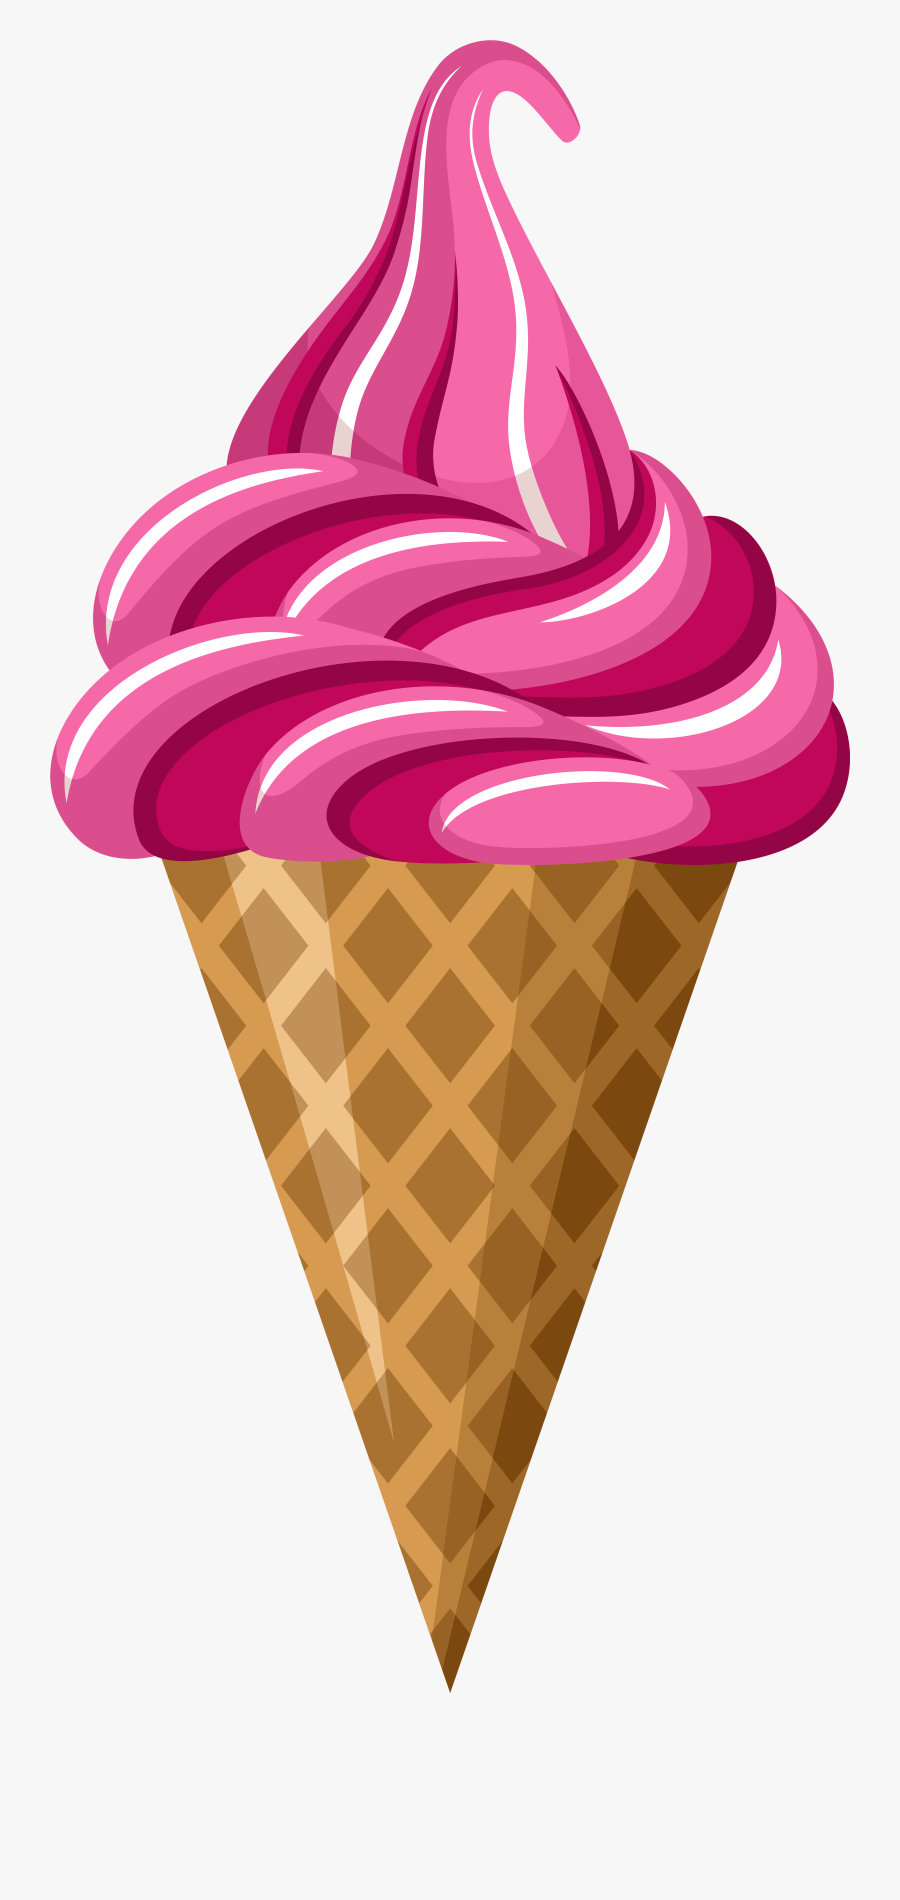 Pink Ice Cream Cone Png Clip Art Image - Ice Cream Cones Png, Transparent Clipart